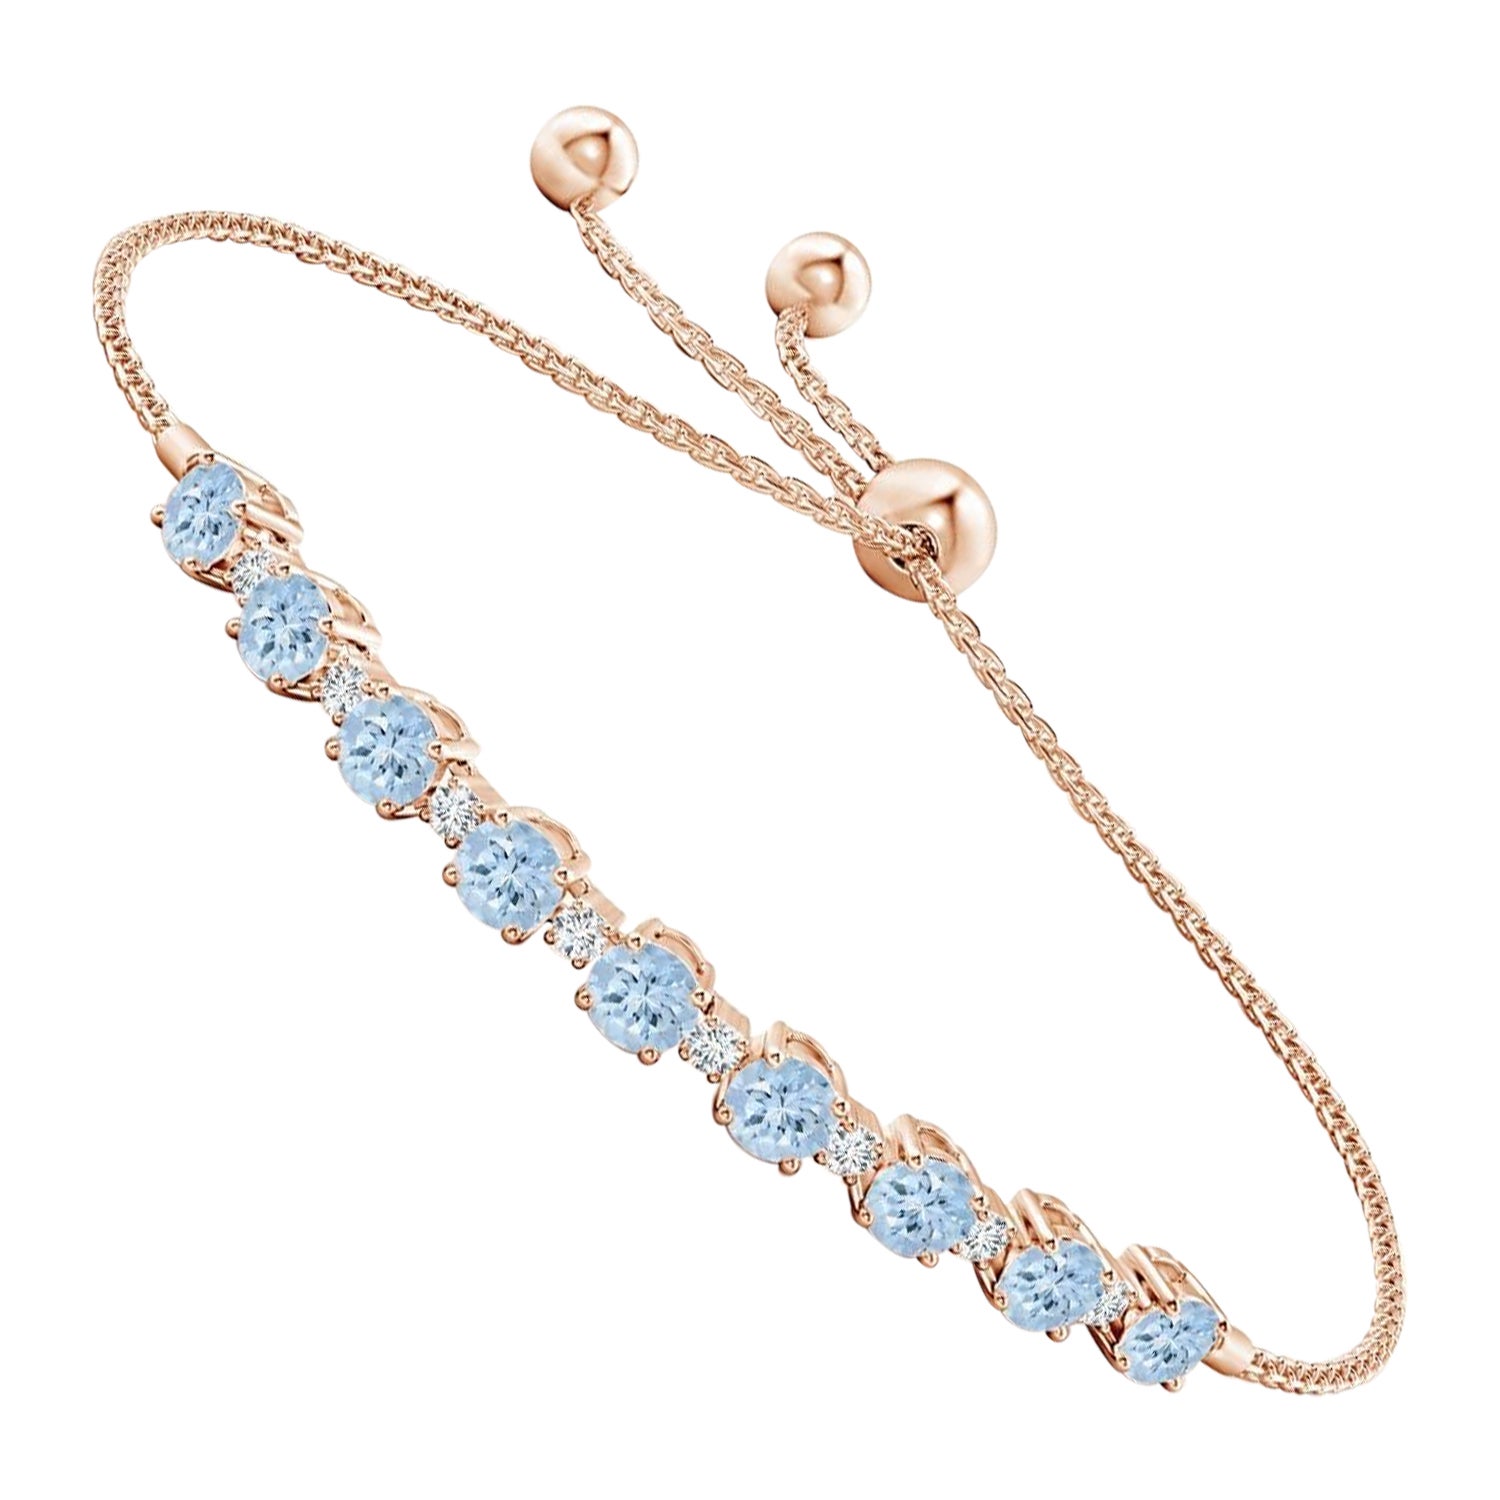 Natural 1.8ct Aquamarine and Diamond Tennis Bracelet in 14K Rose Gold